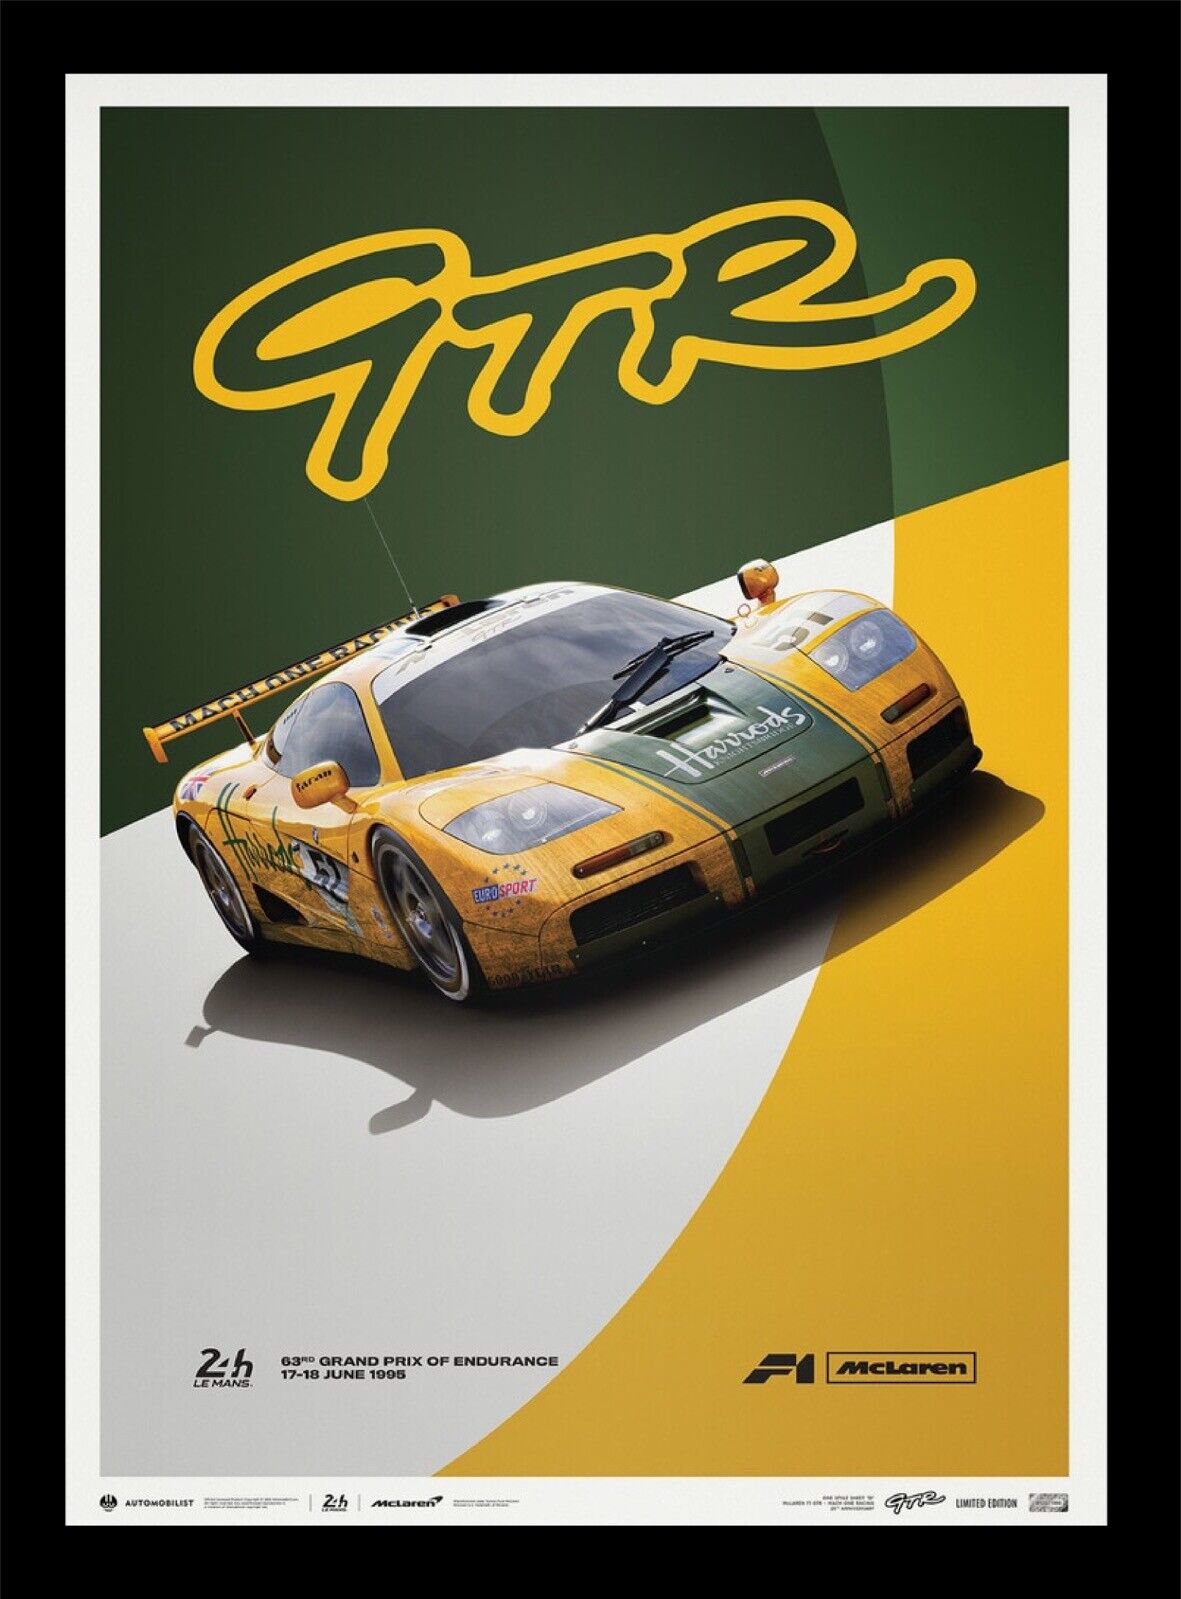 McLaren F1 GTR Mach One 1995 Le Mans 24 Hours Art Print Poster Ltd Ed